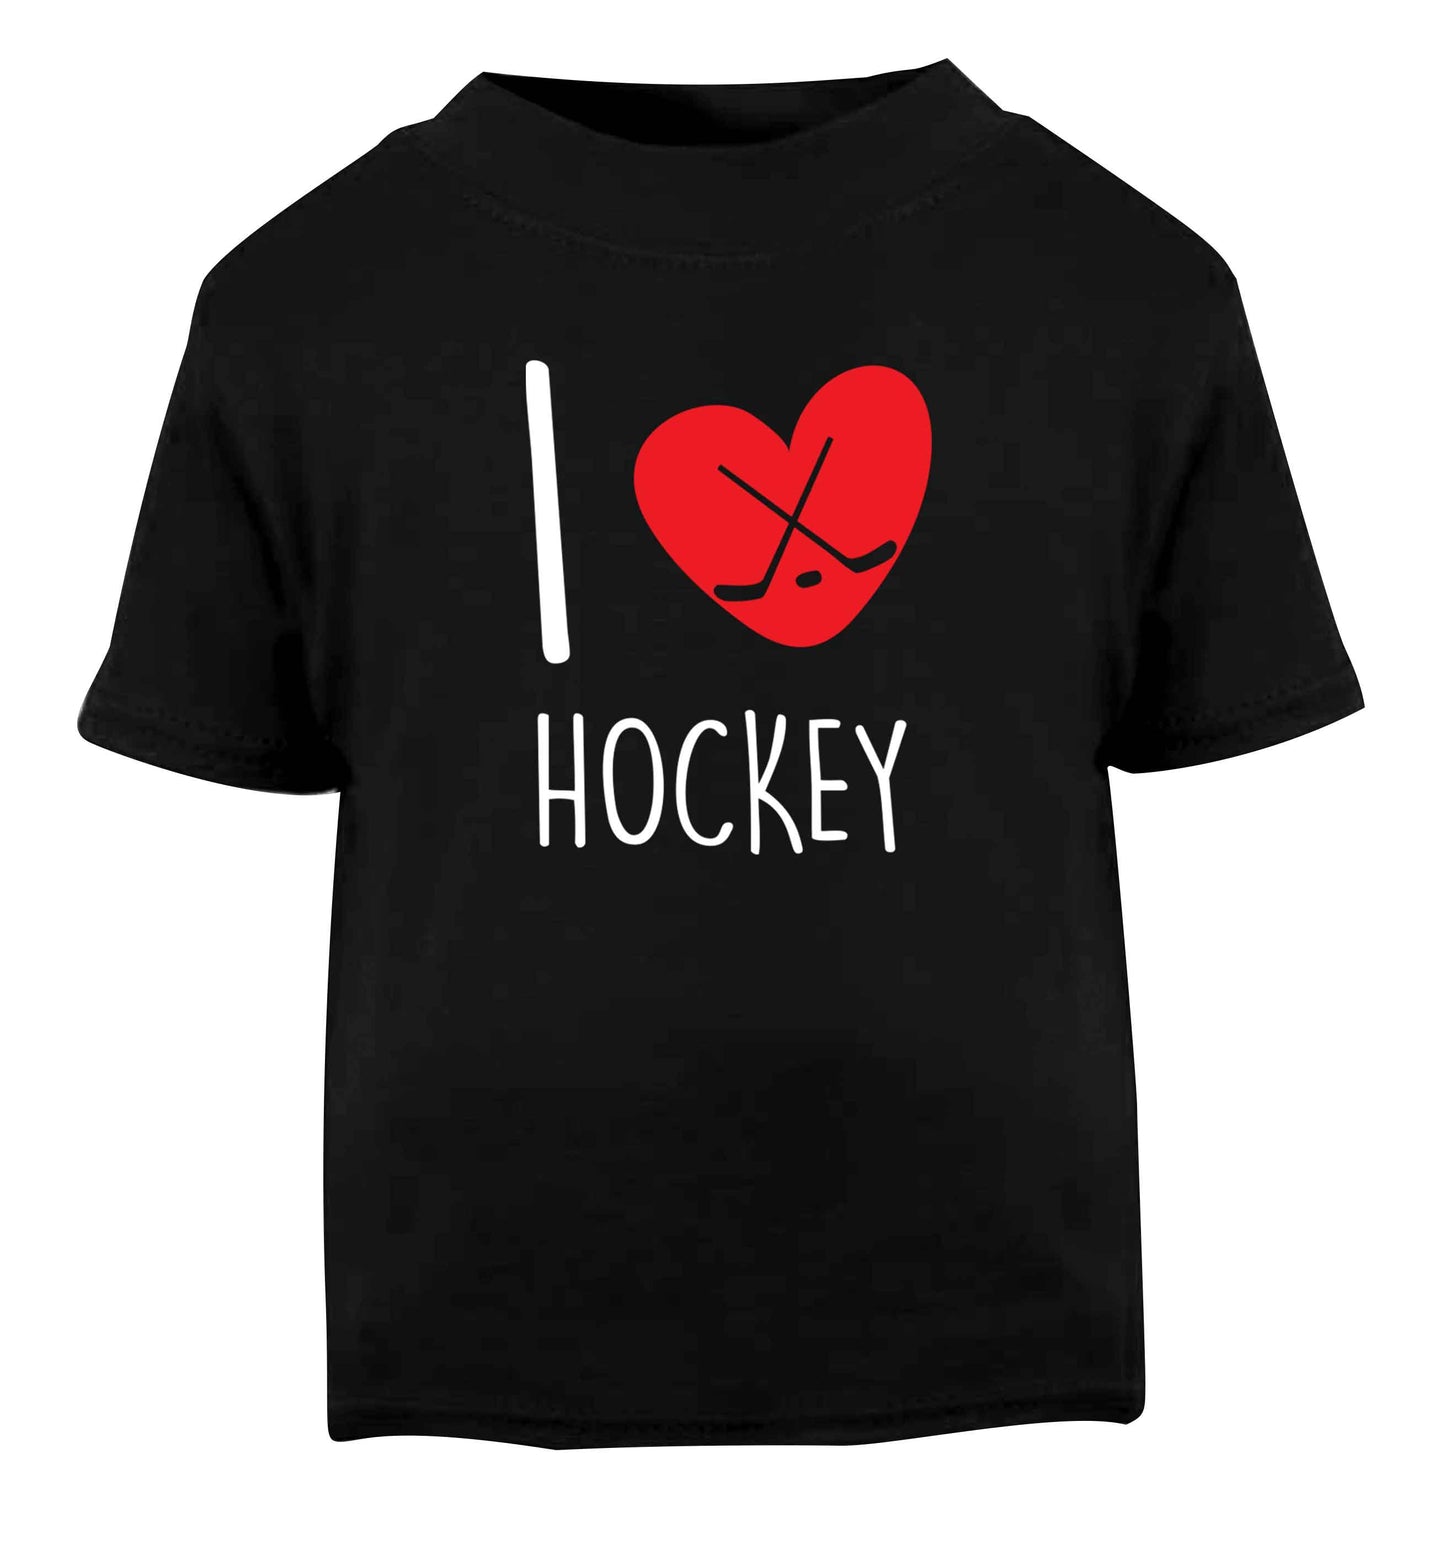 I love hockey Black Baby Toddler Tshirt 2 years